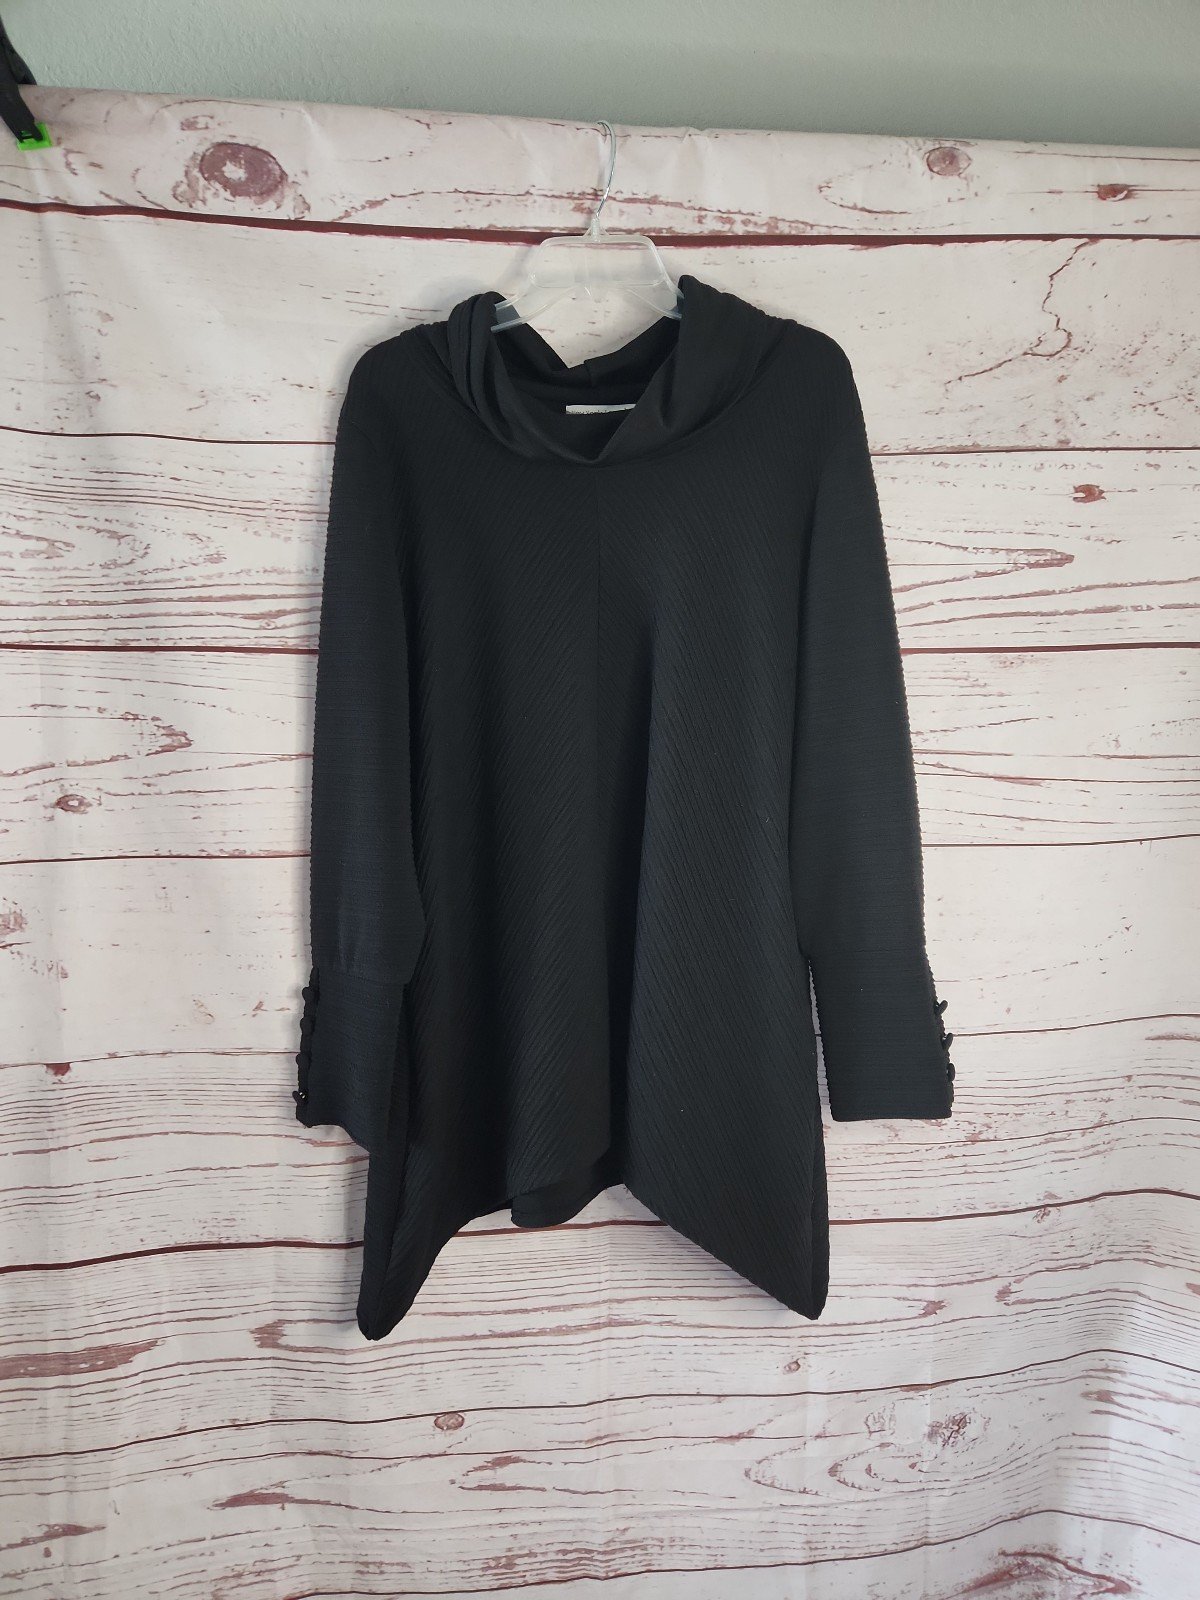 good price New York Laundry sweater top - black - size 